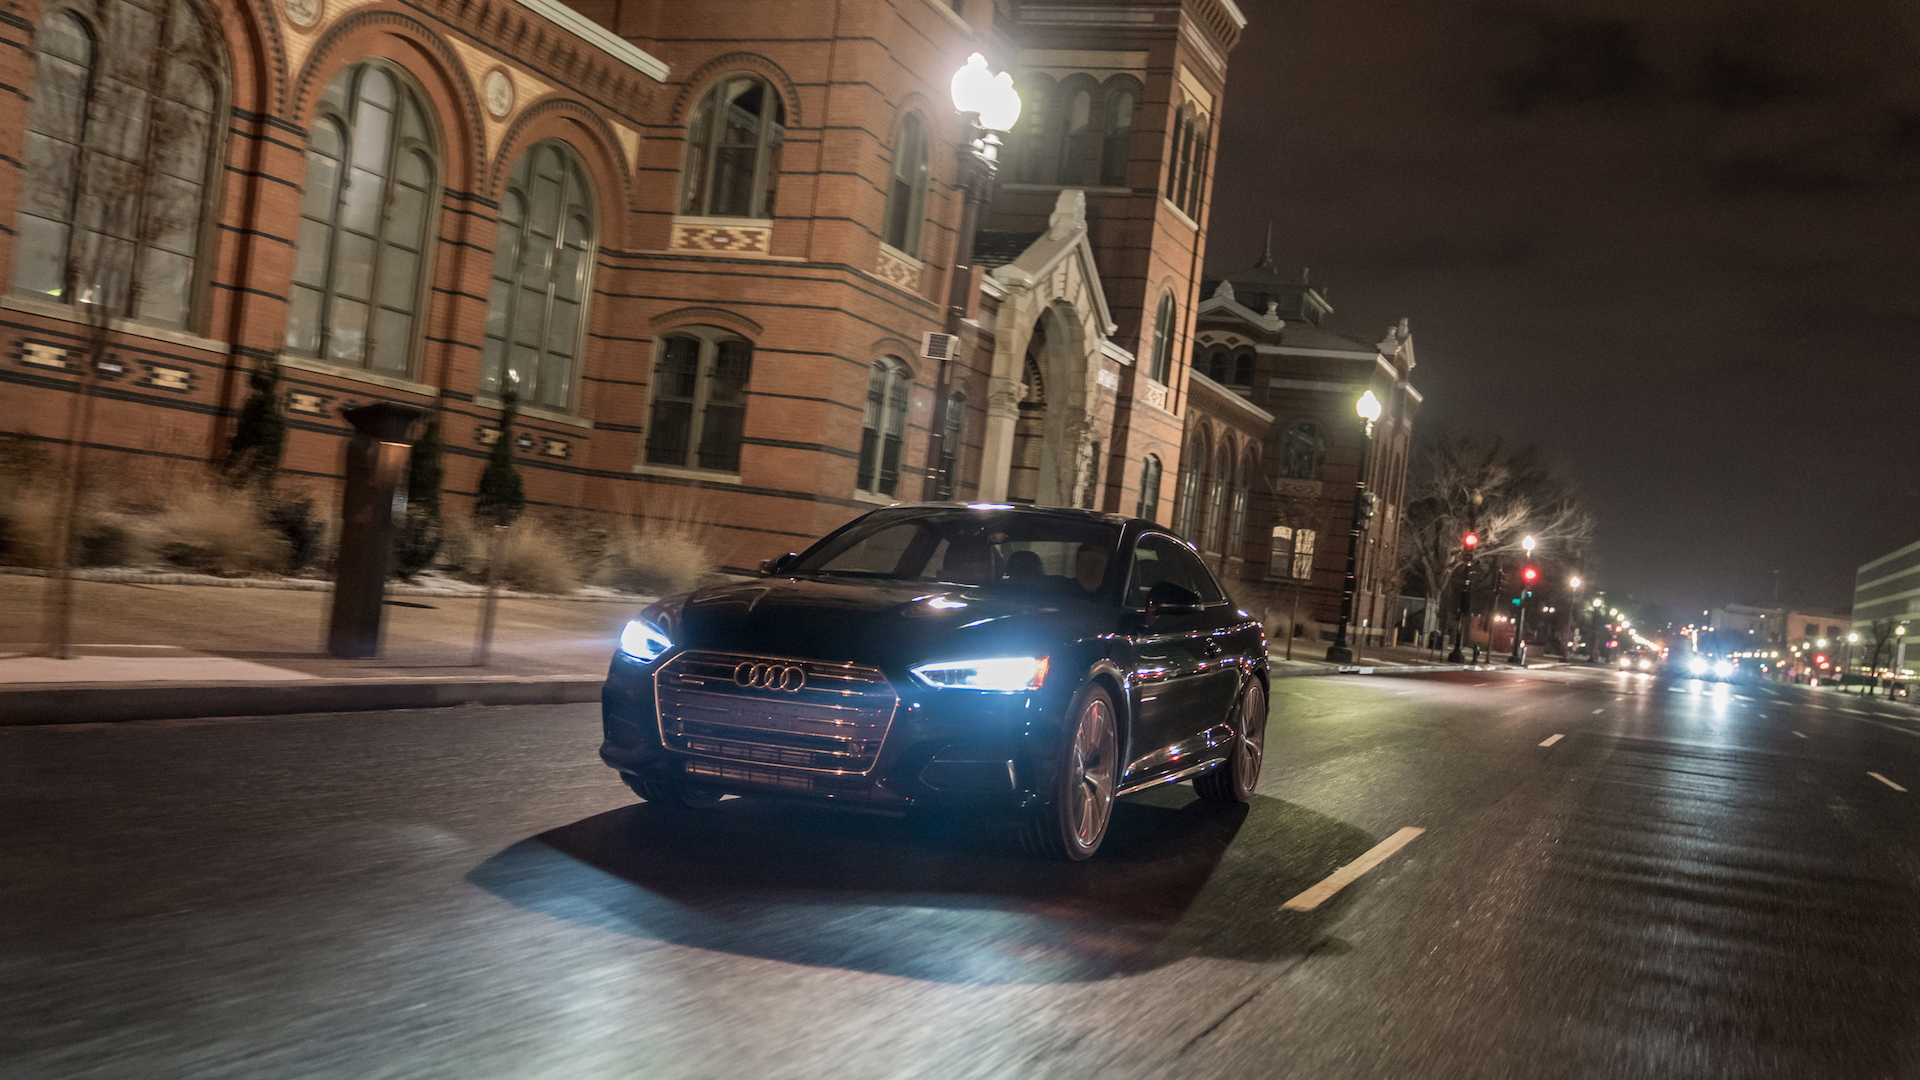 Audi brings Traffic Light Info system to Washington DC